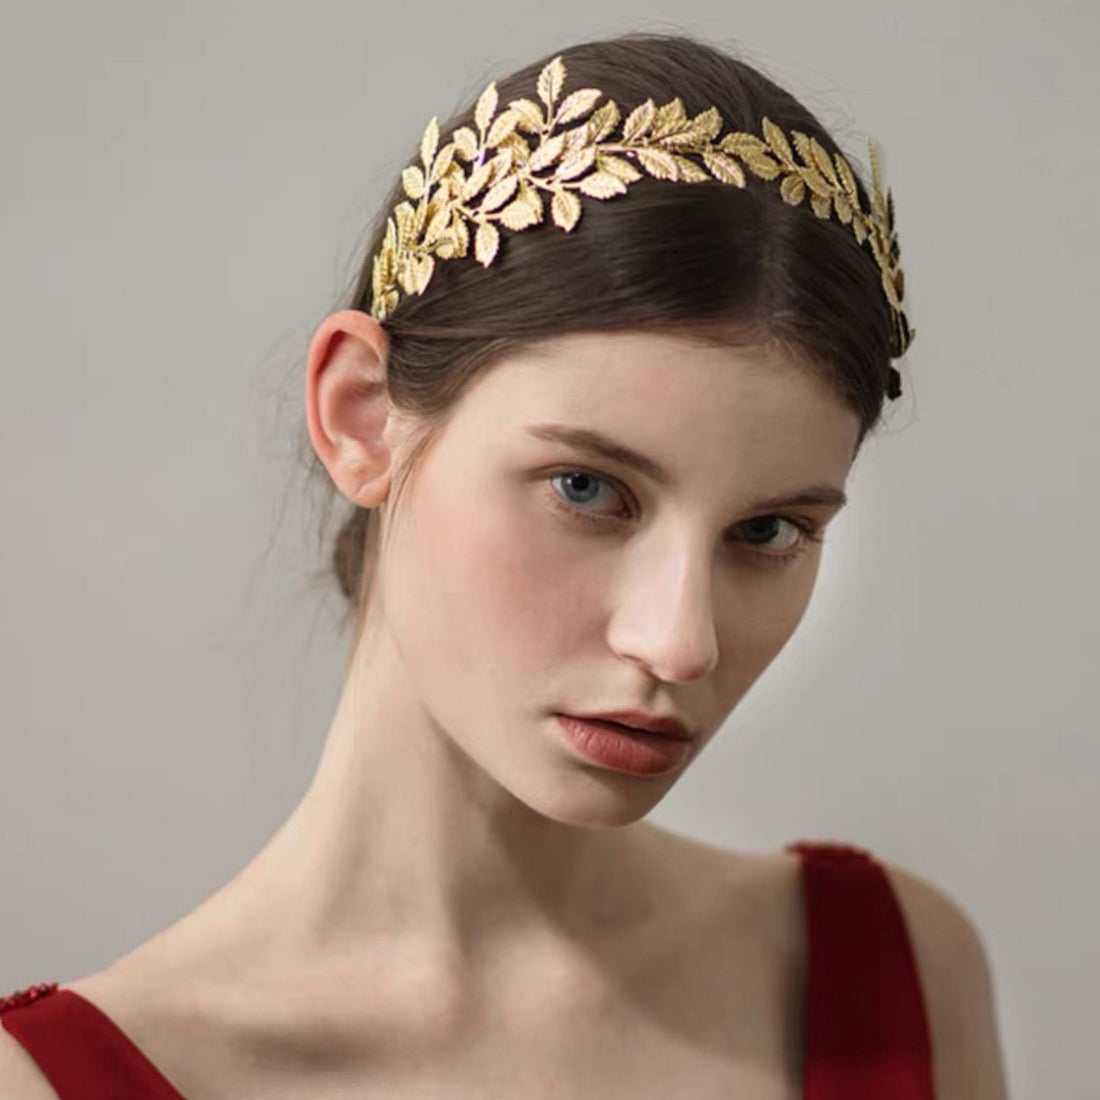 Griekse godin gouden bladeren hoofdband - elegant metalen verguld bruidsaccessoire